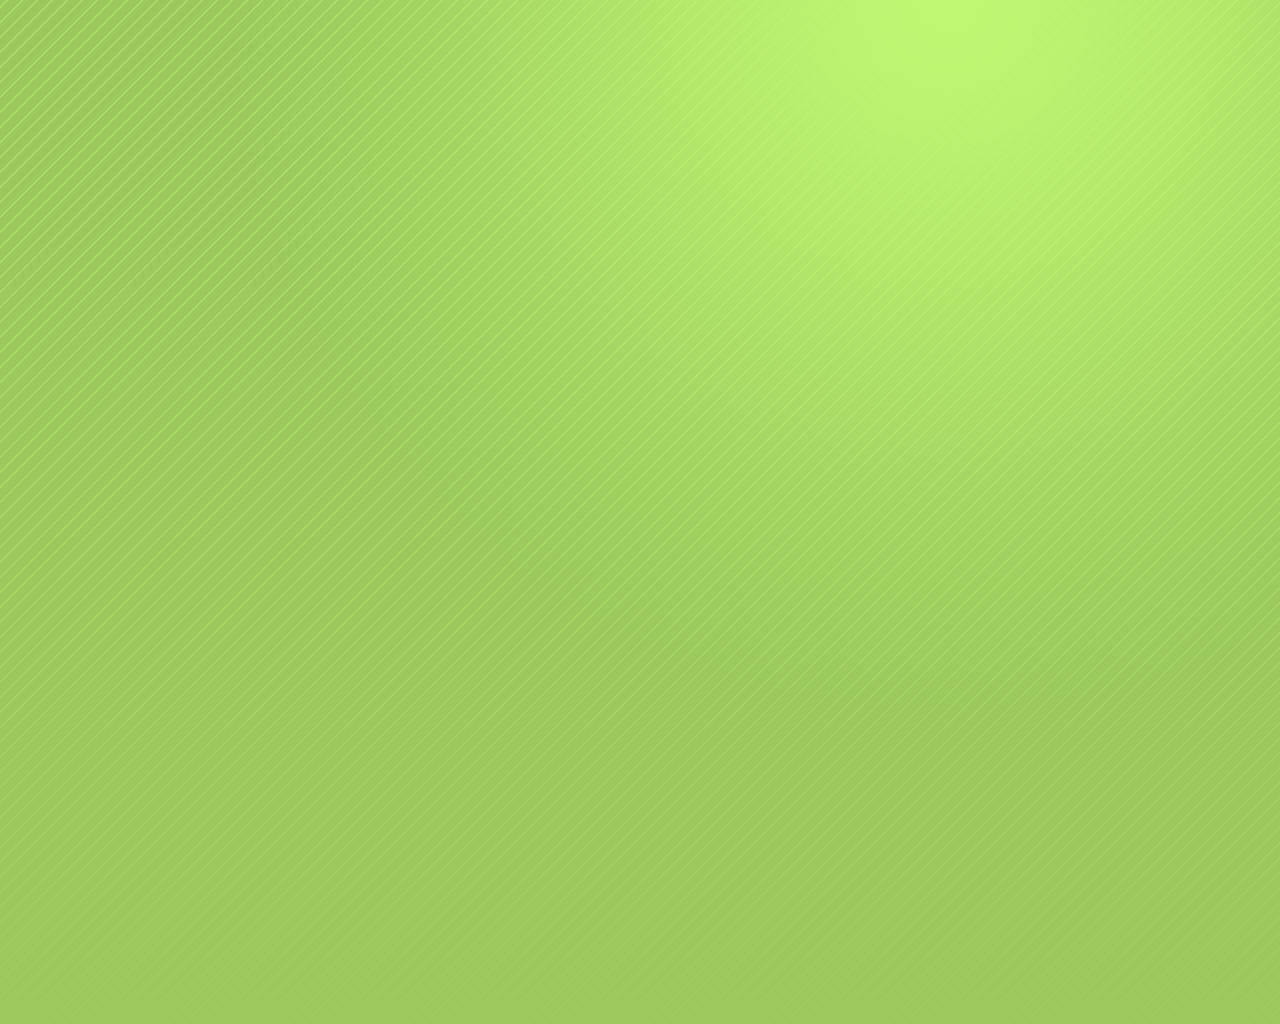 100+] Light Green Plain Backgrounds